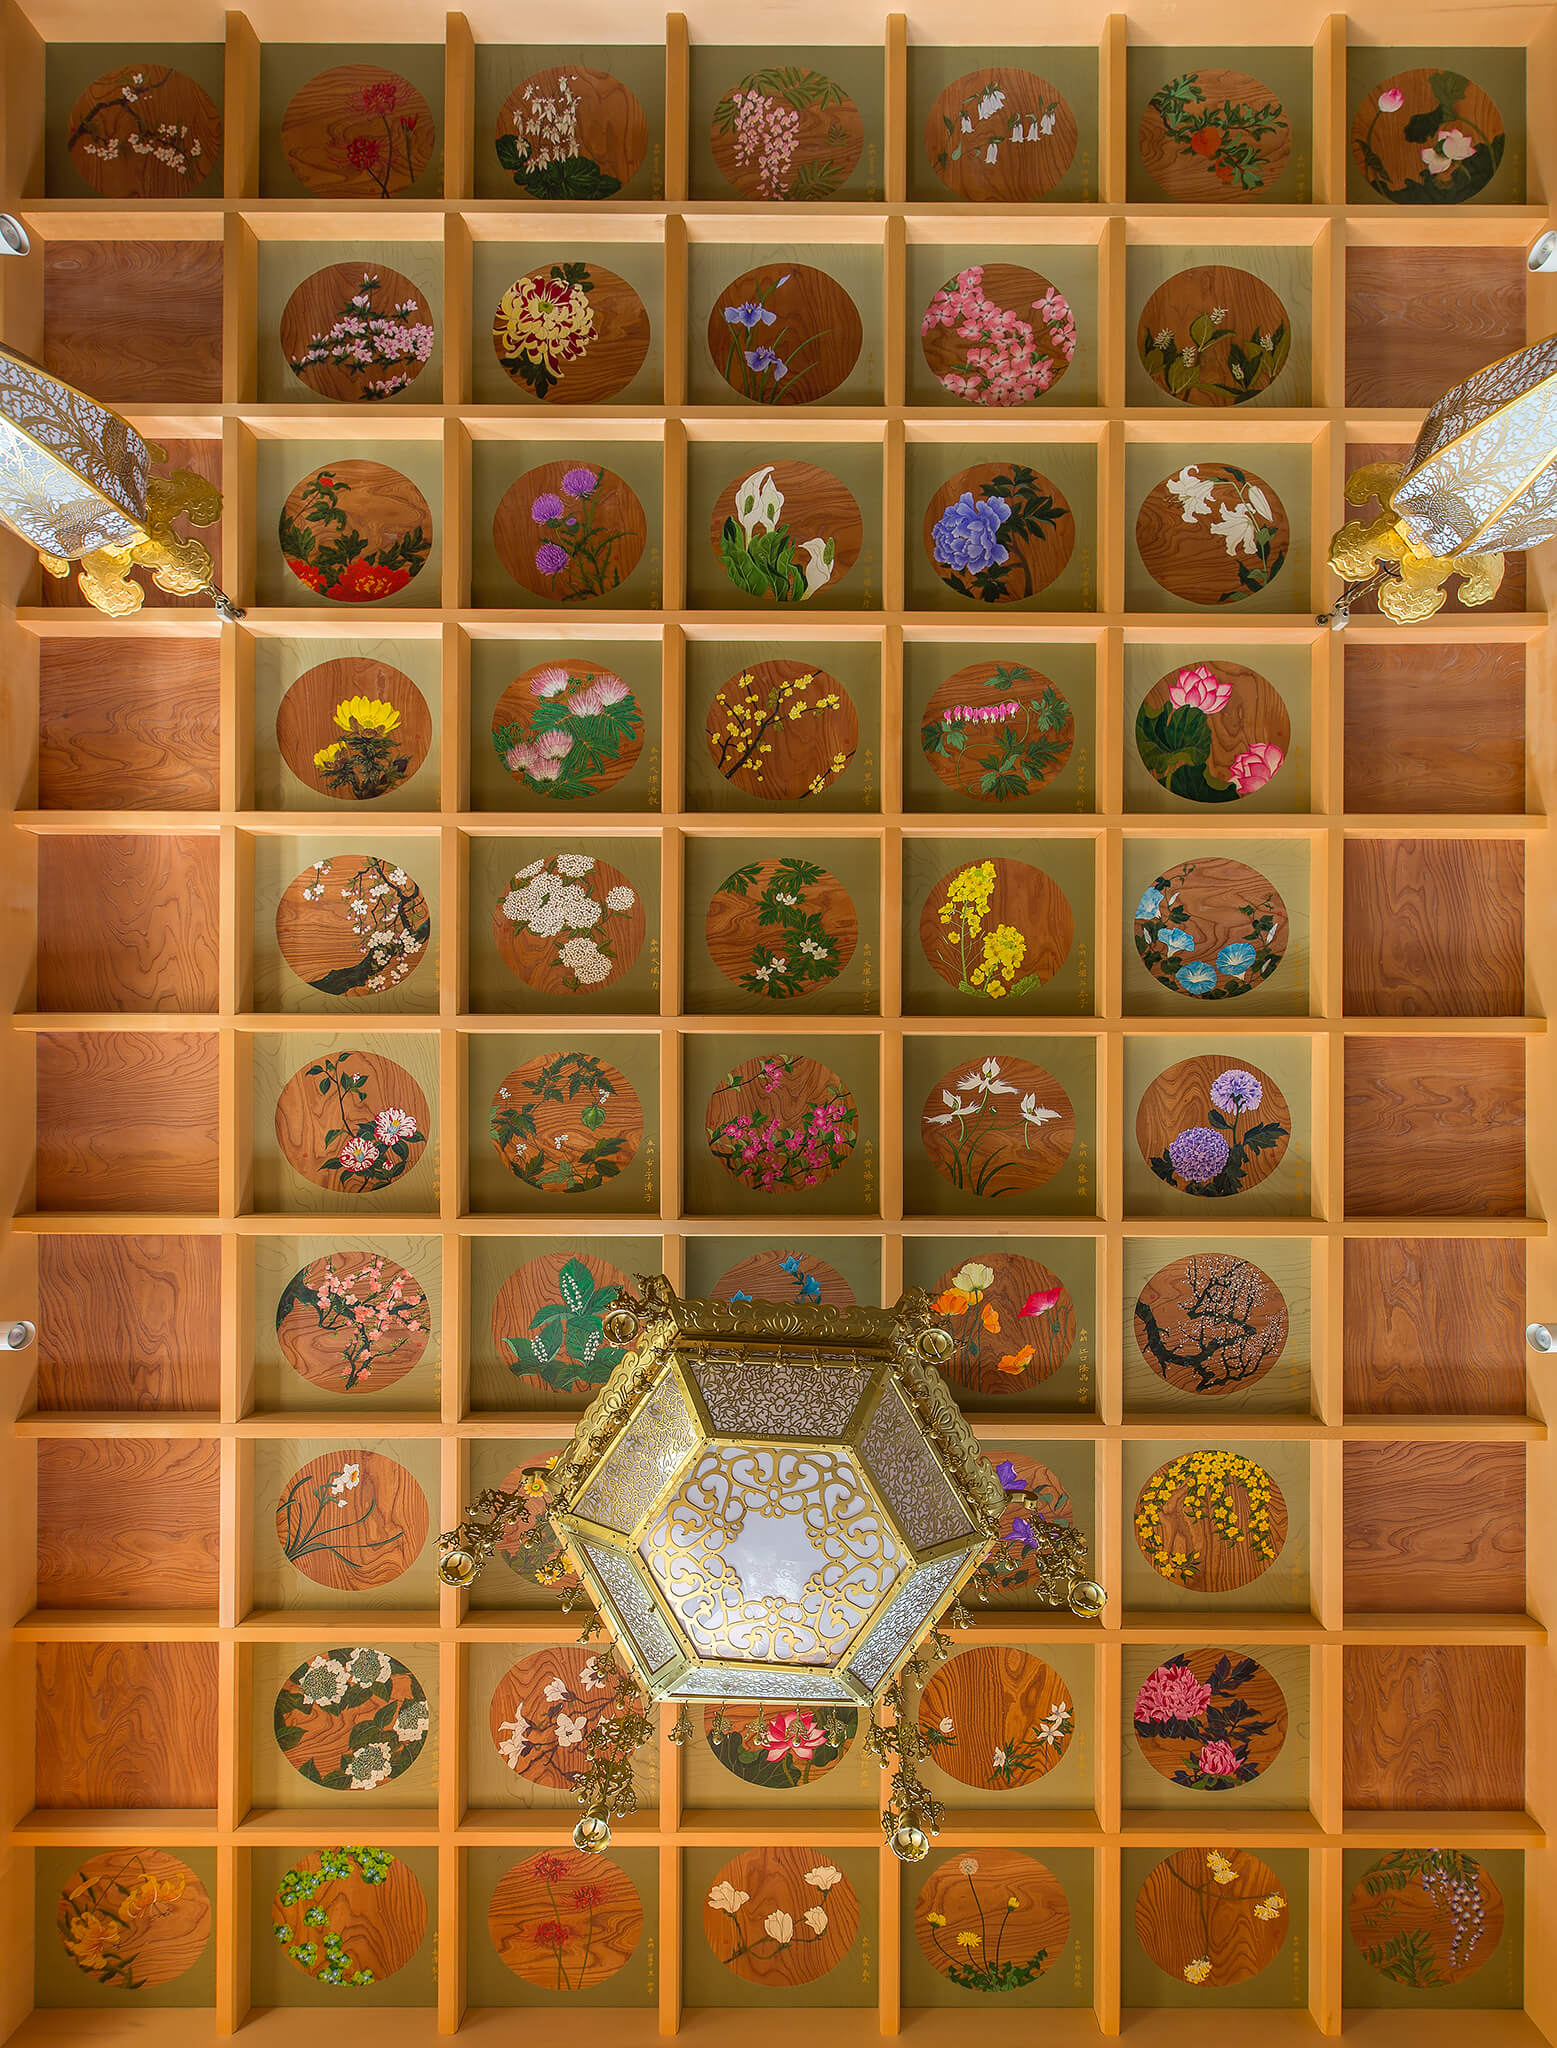 ‘Hanamaru Tenjyo’ (Floral Circles on the Ceiling), Main Hall Ceiling Art